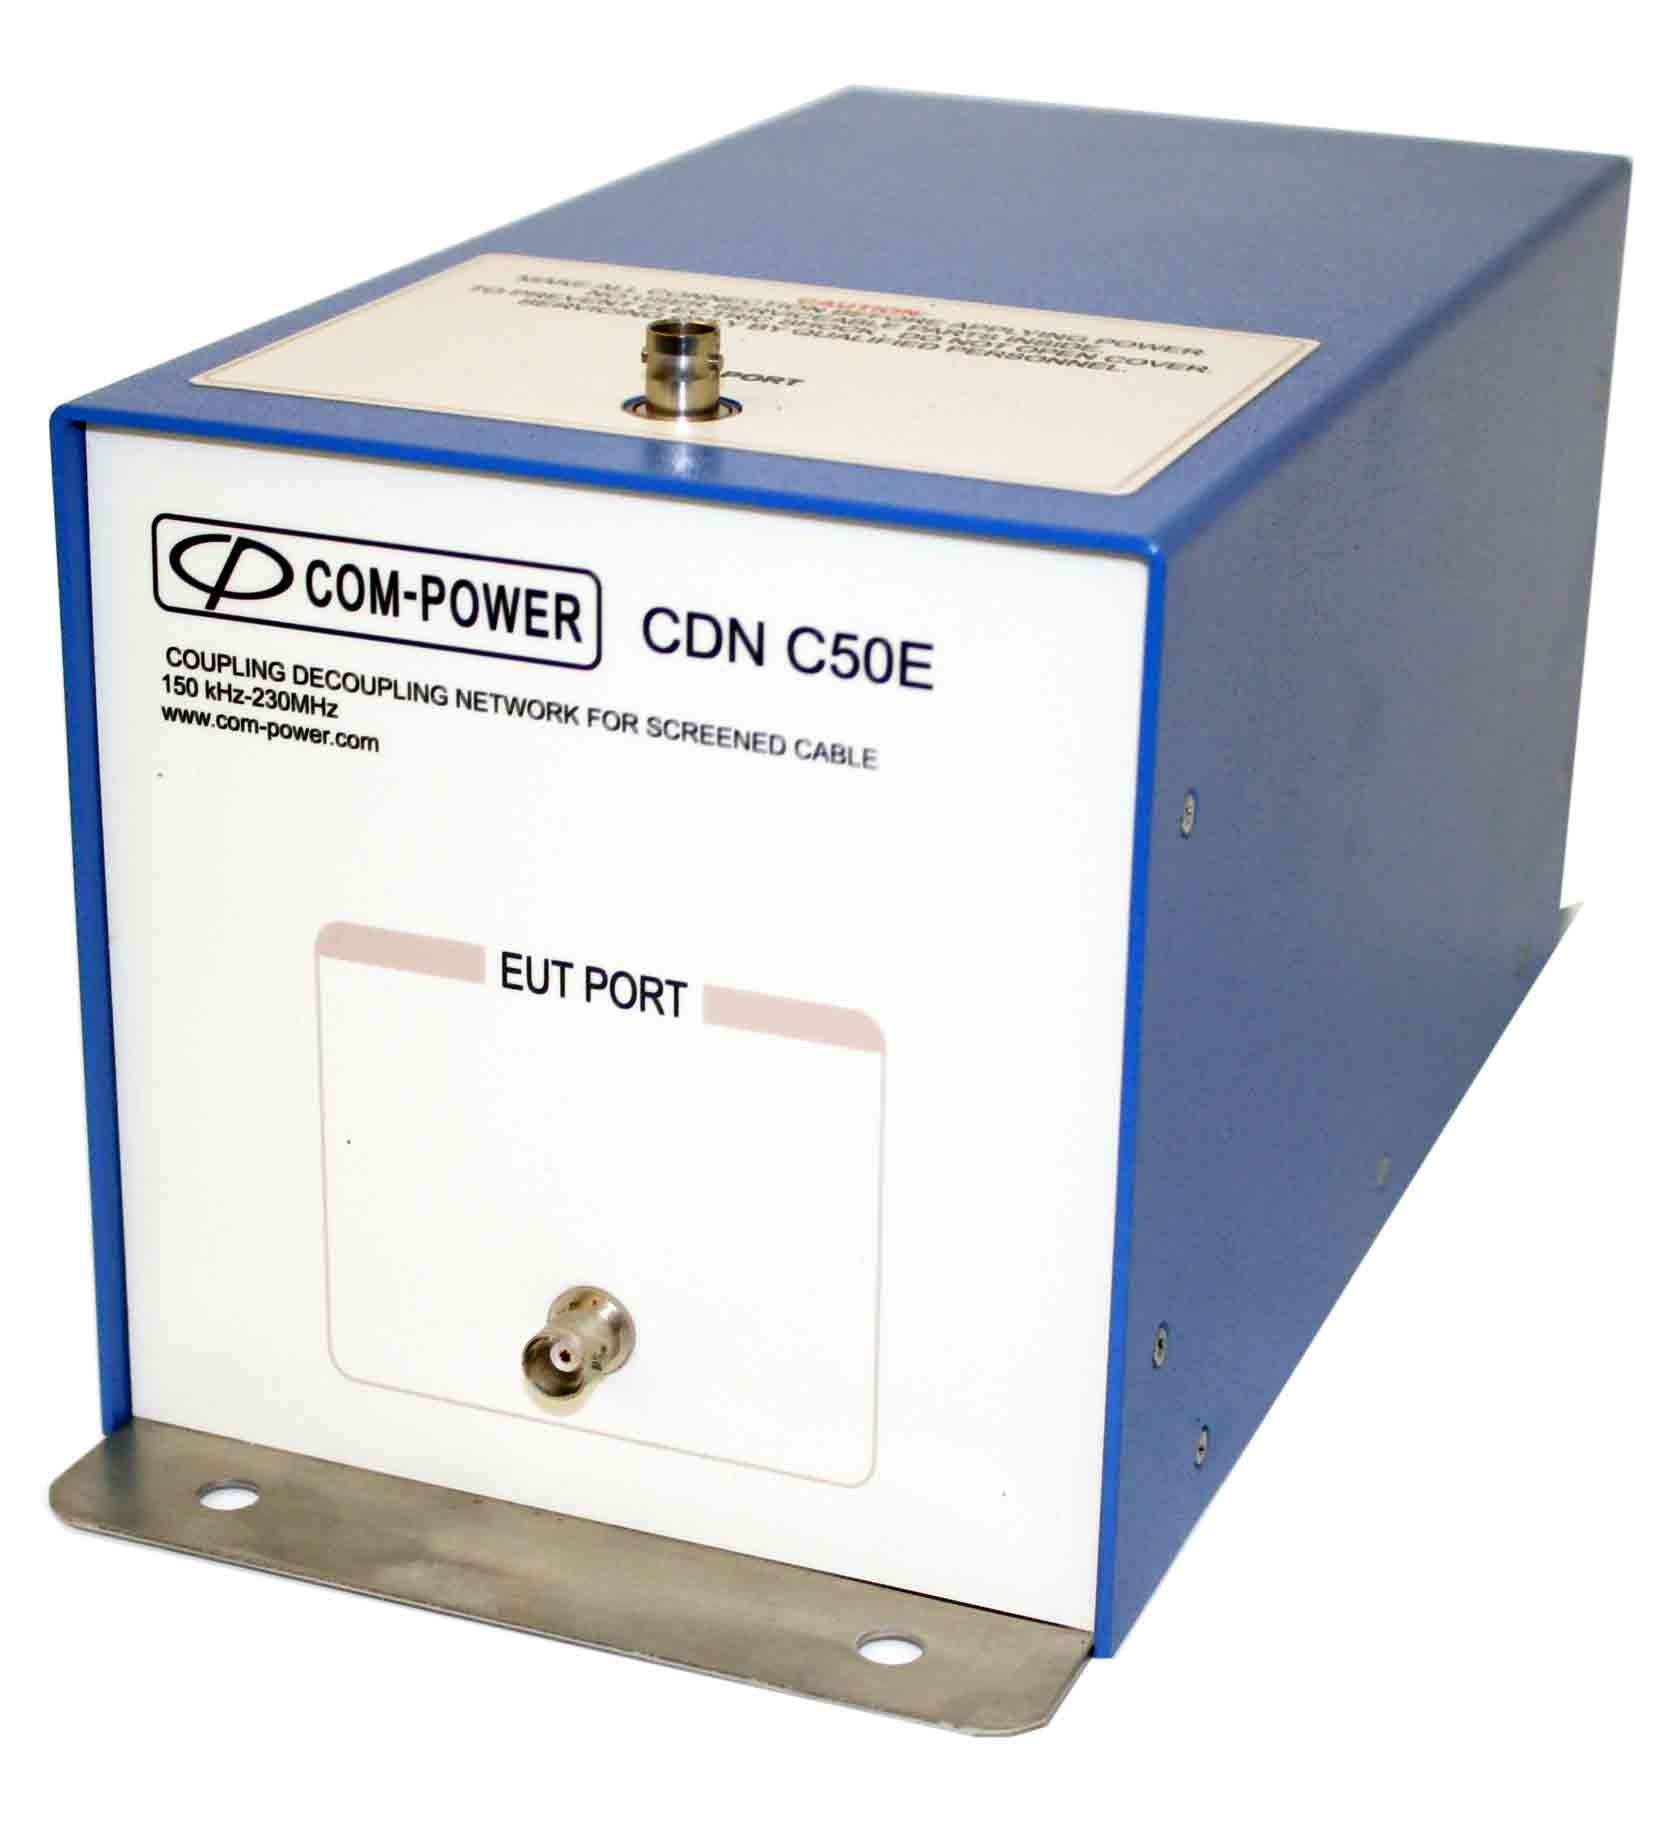 CDN-C50E - Com-Power CDN Coupling Decoupling Networks